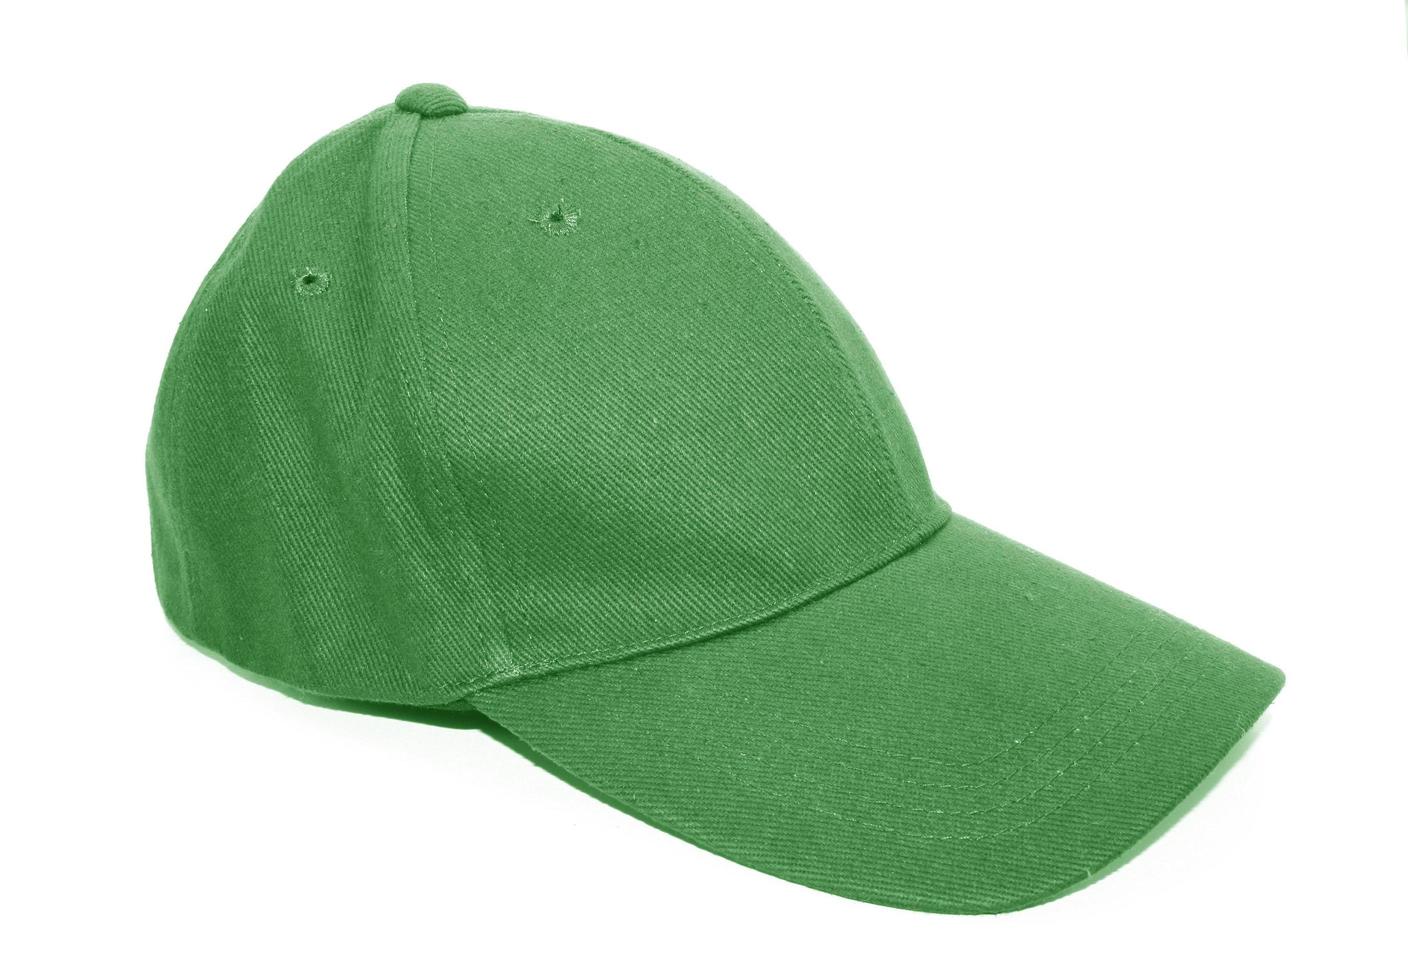 casquette de baseball verte photo